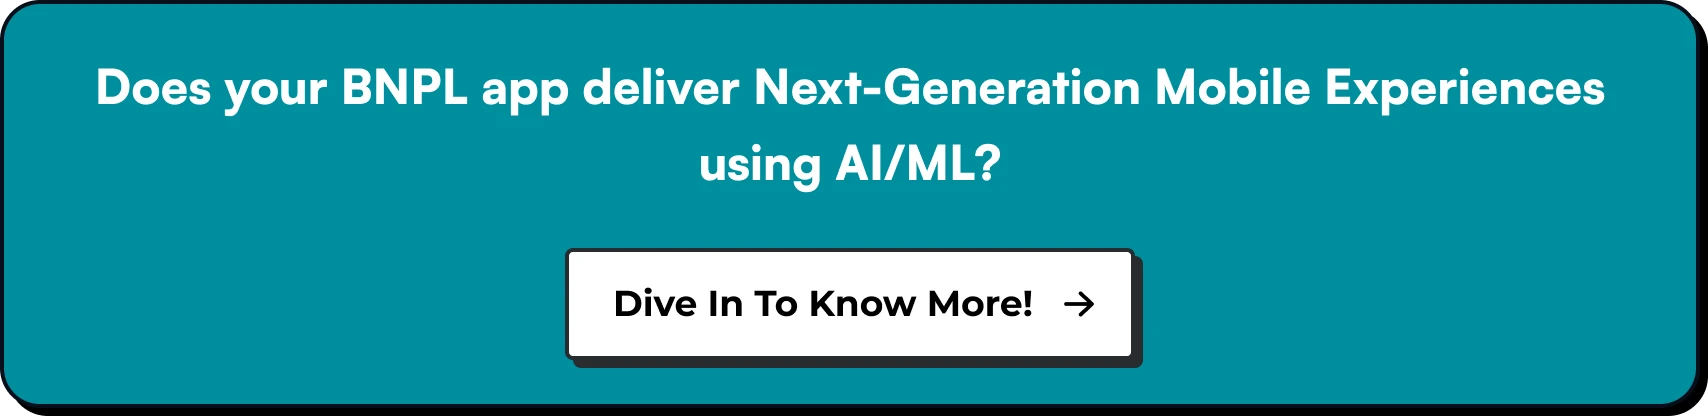 Does your BNPL app deliver Next-Generation Mobile Experiences using AI:ML